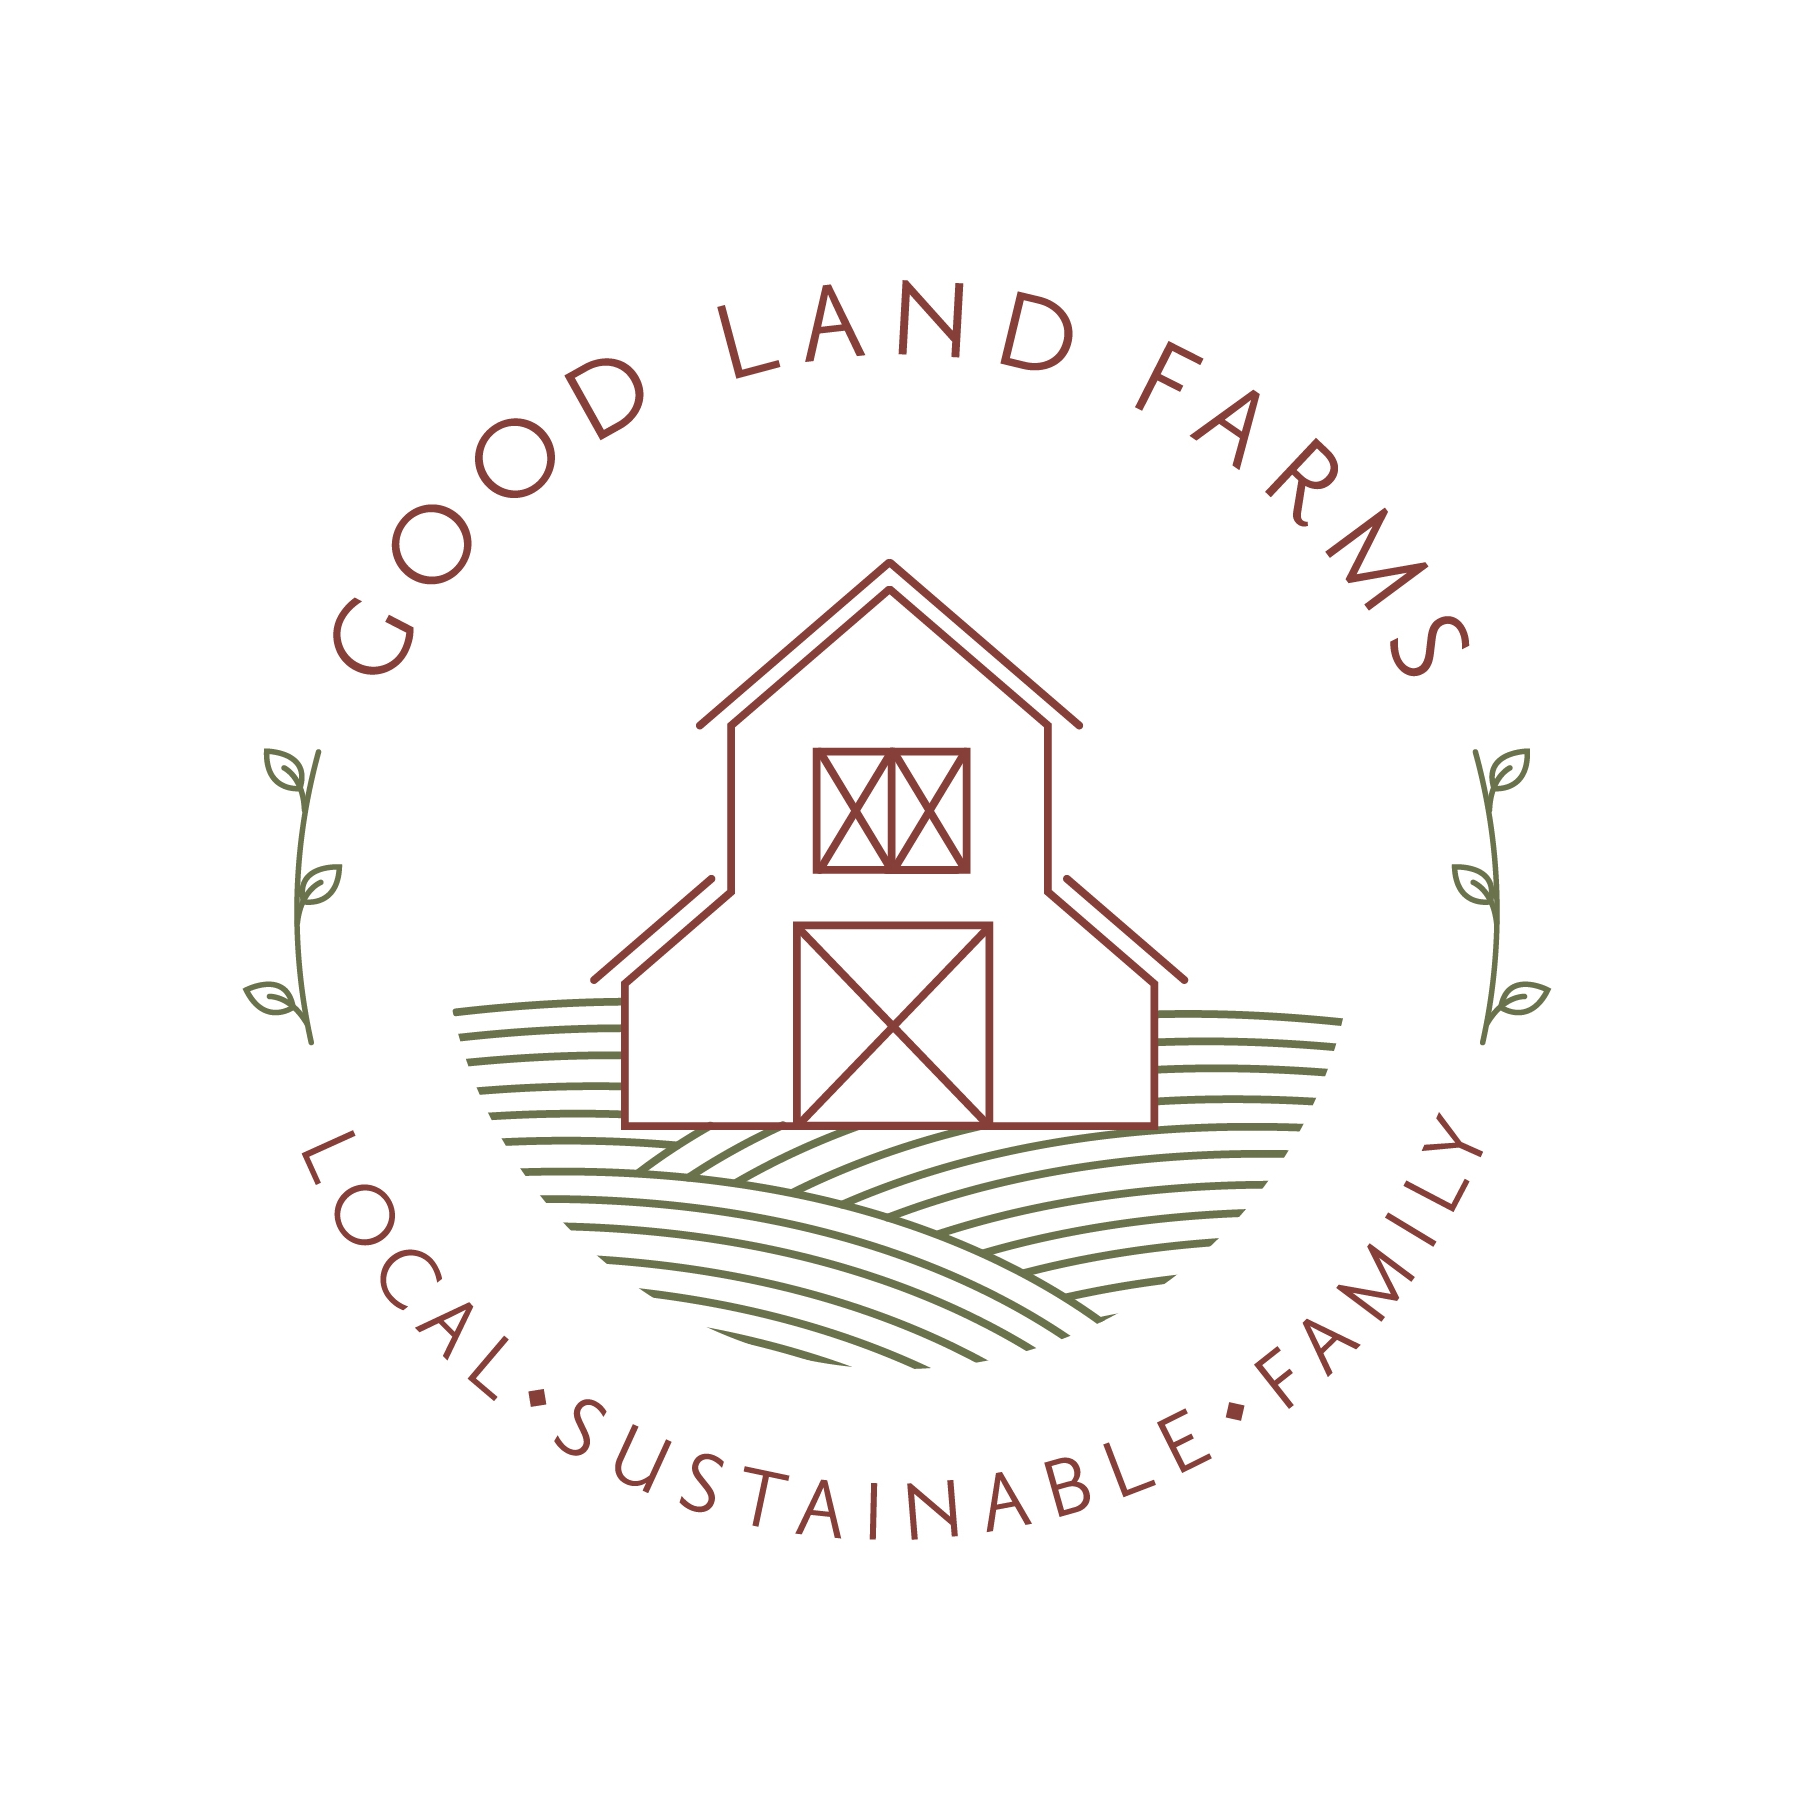 Good Land Farms